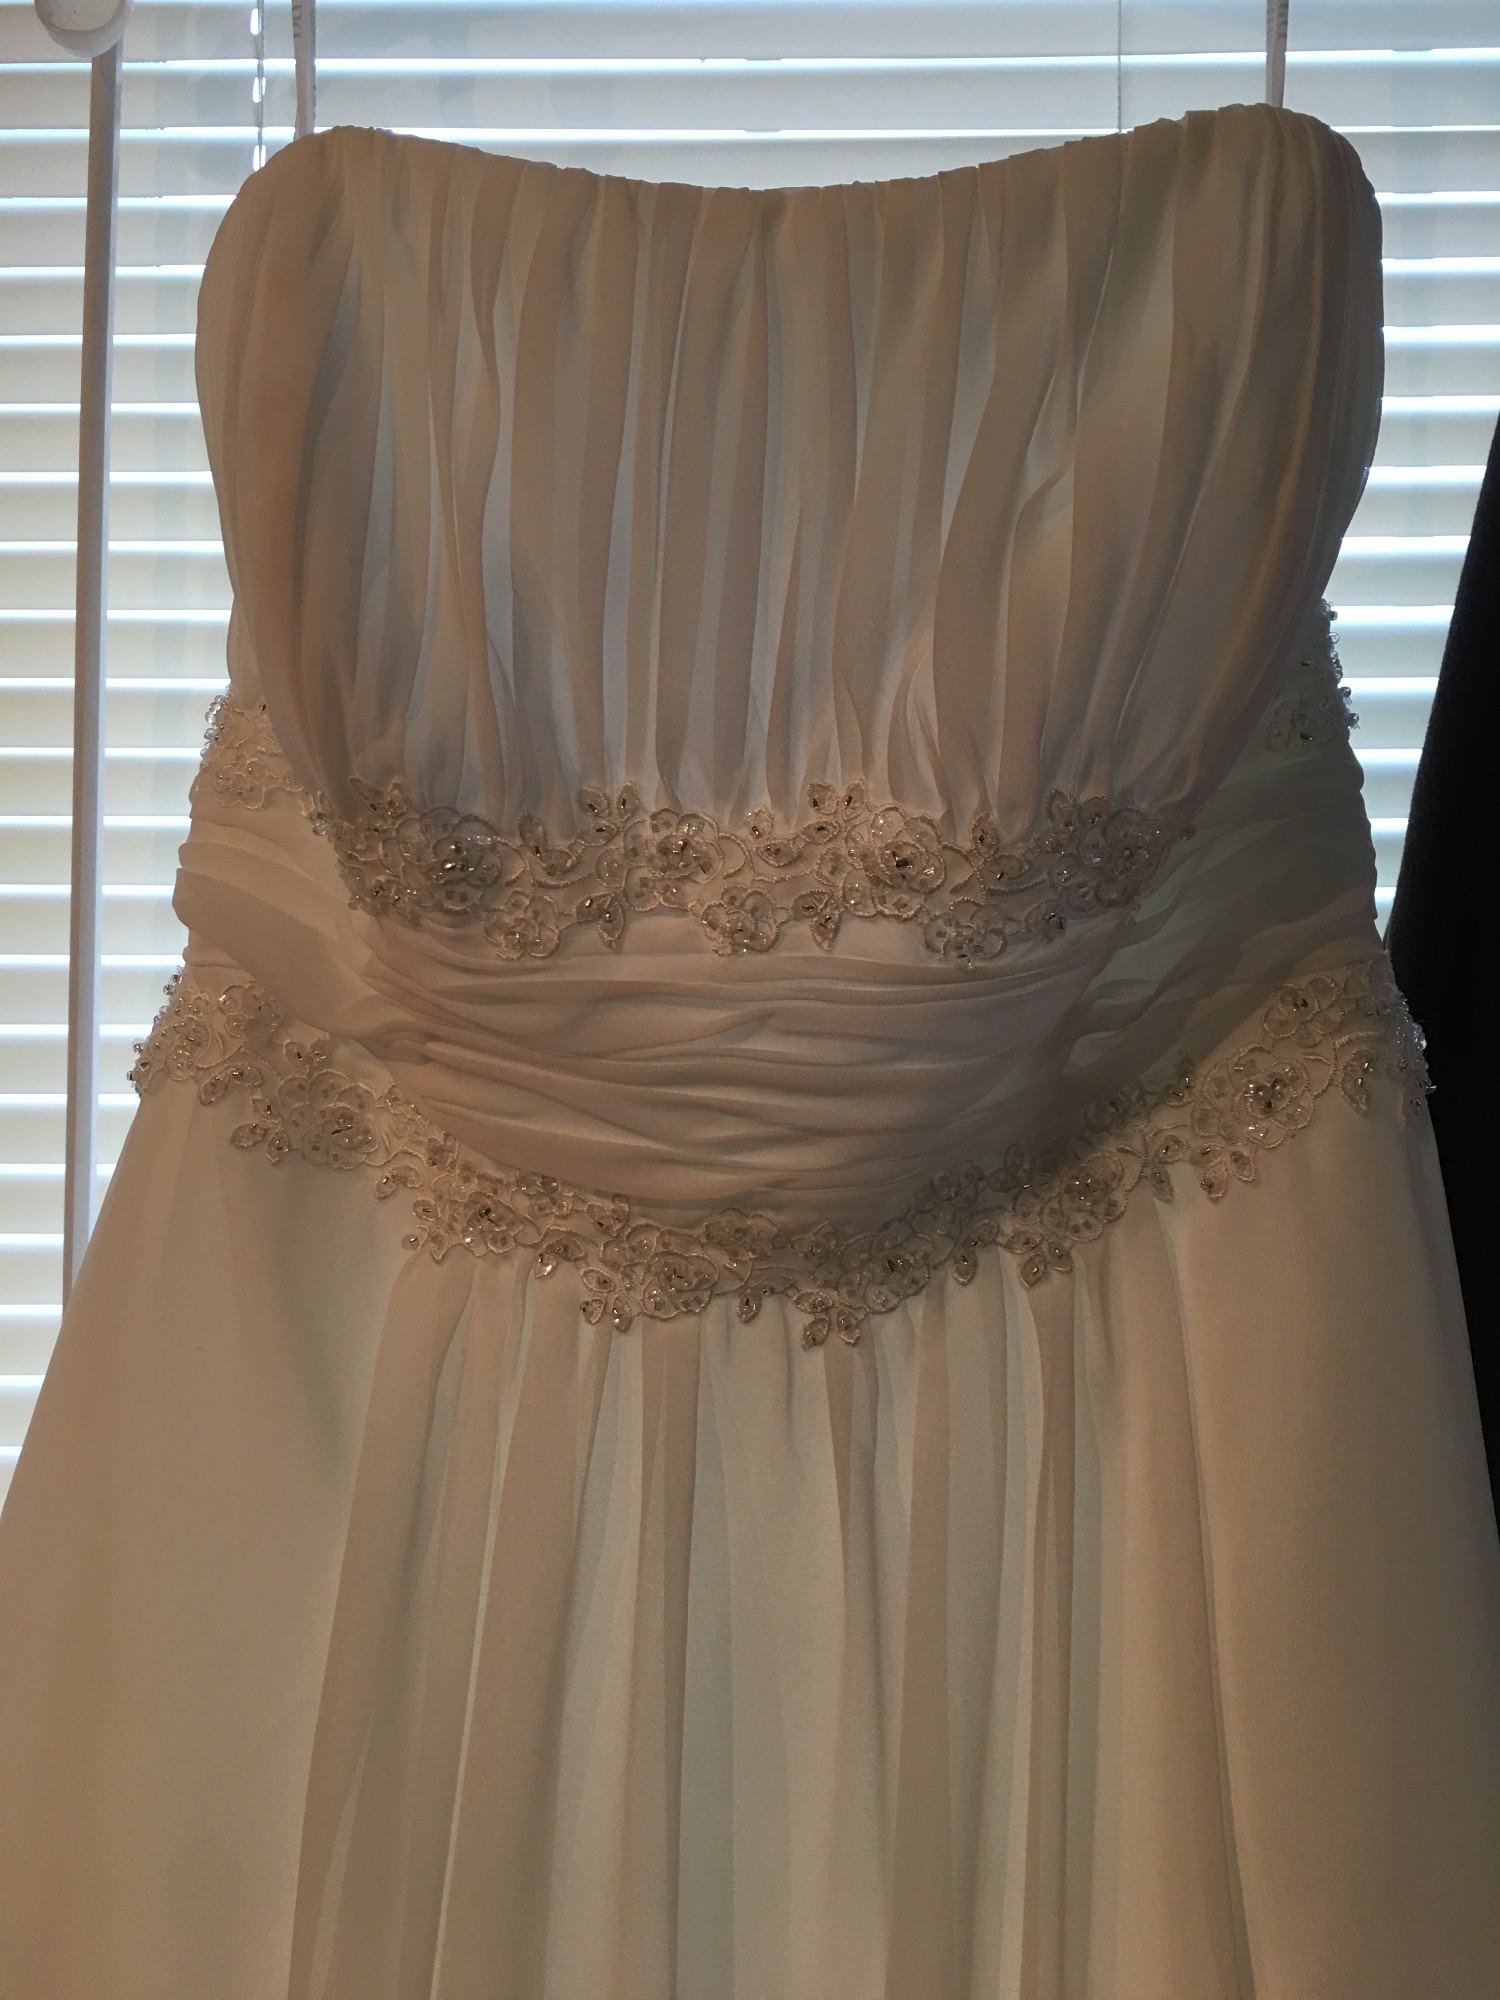 Soft Chiffon Wedding Dress with Beaded Lace Detail